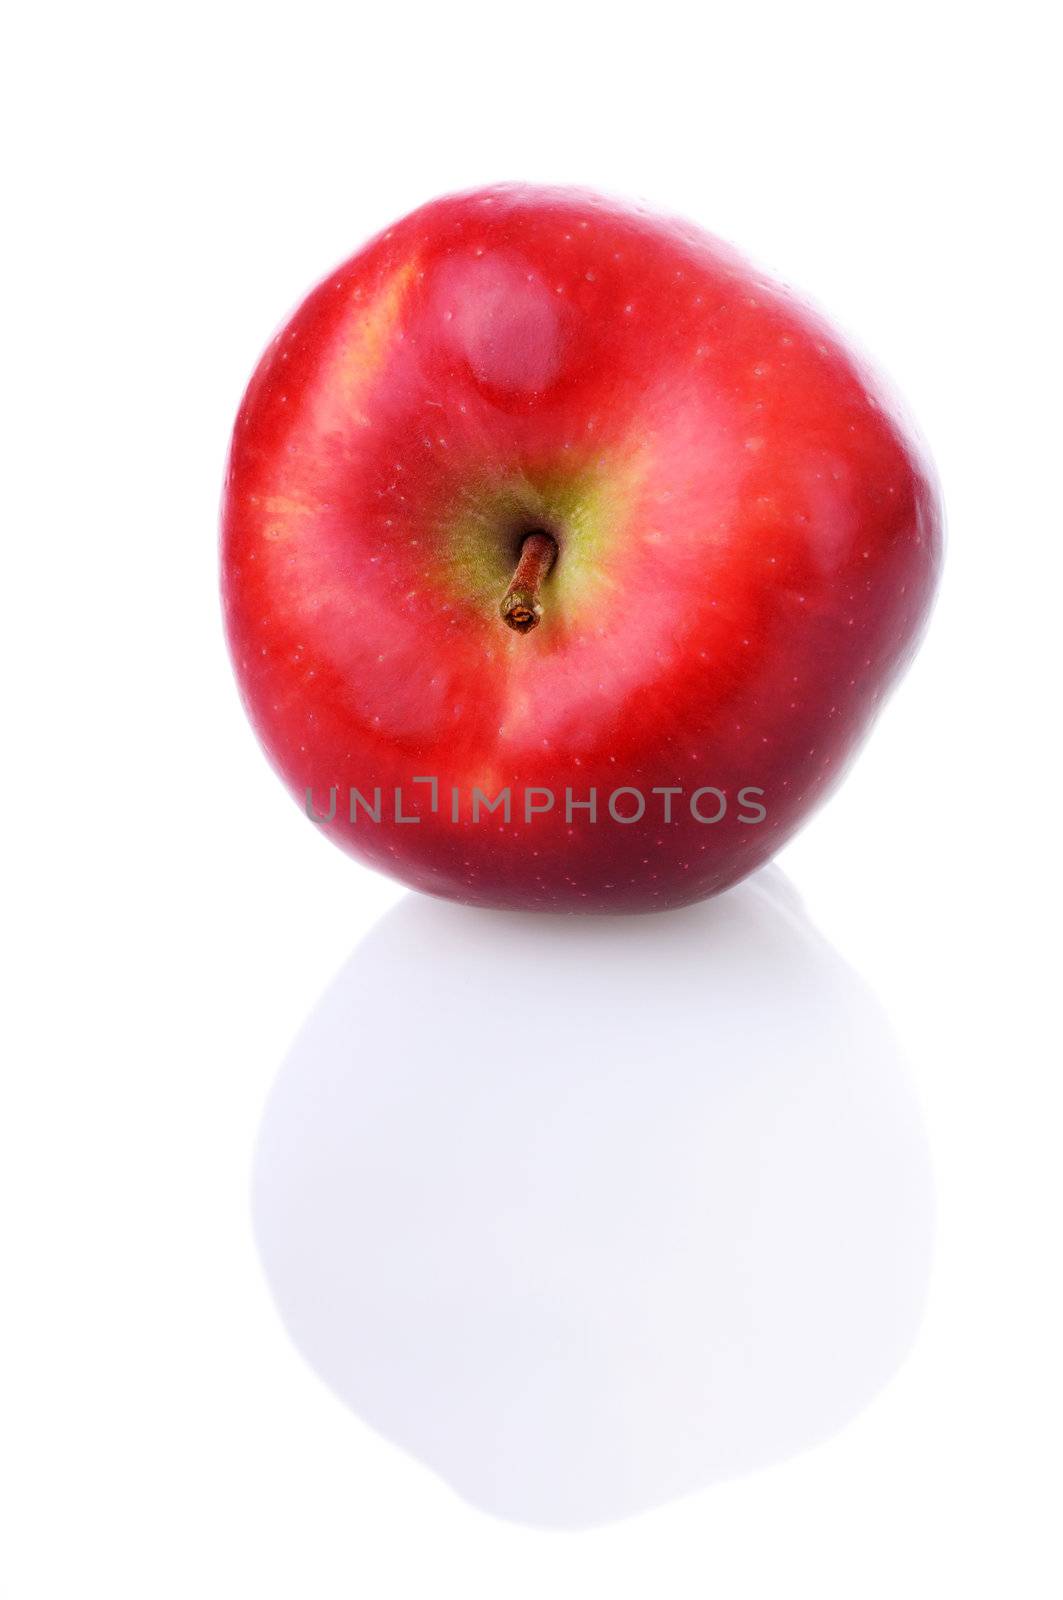 Red apple with stem and reflection by iryna_rasko